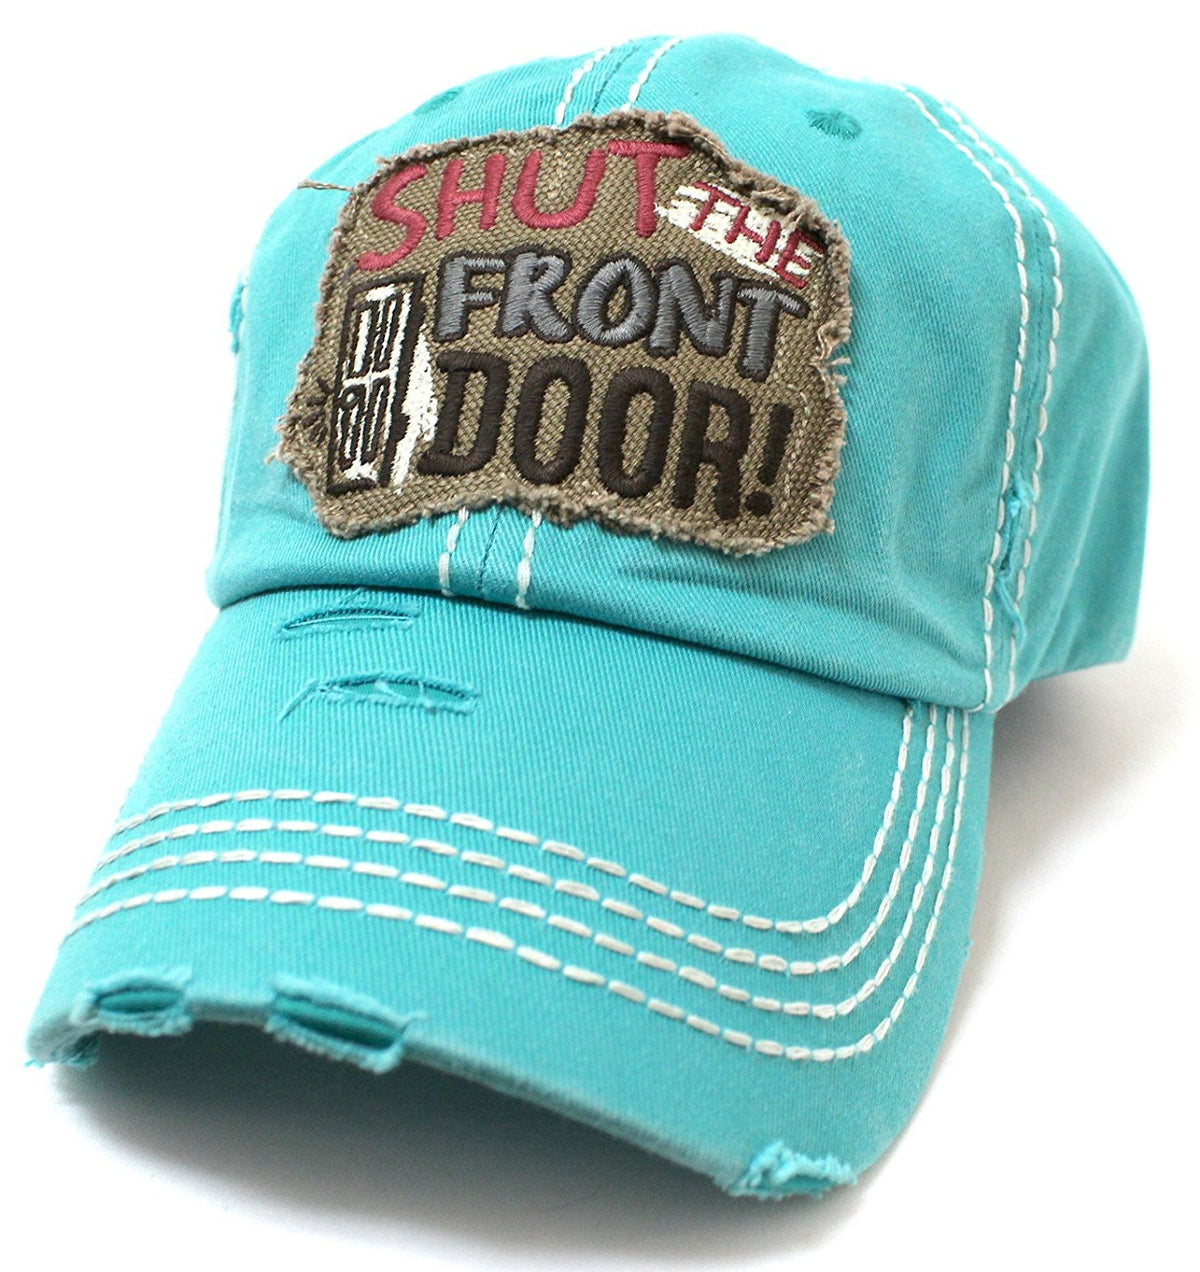 CAPS 'N VINTAGE Turquoise Shut The Front Door! Patch Embroidery Humor Ladies' Cap - Caps 'N Vintage 